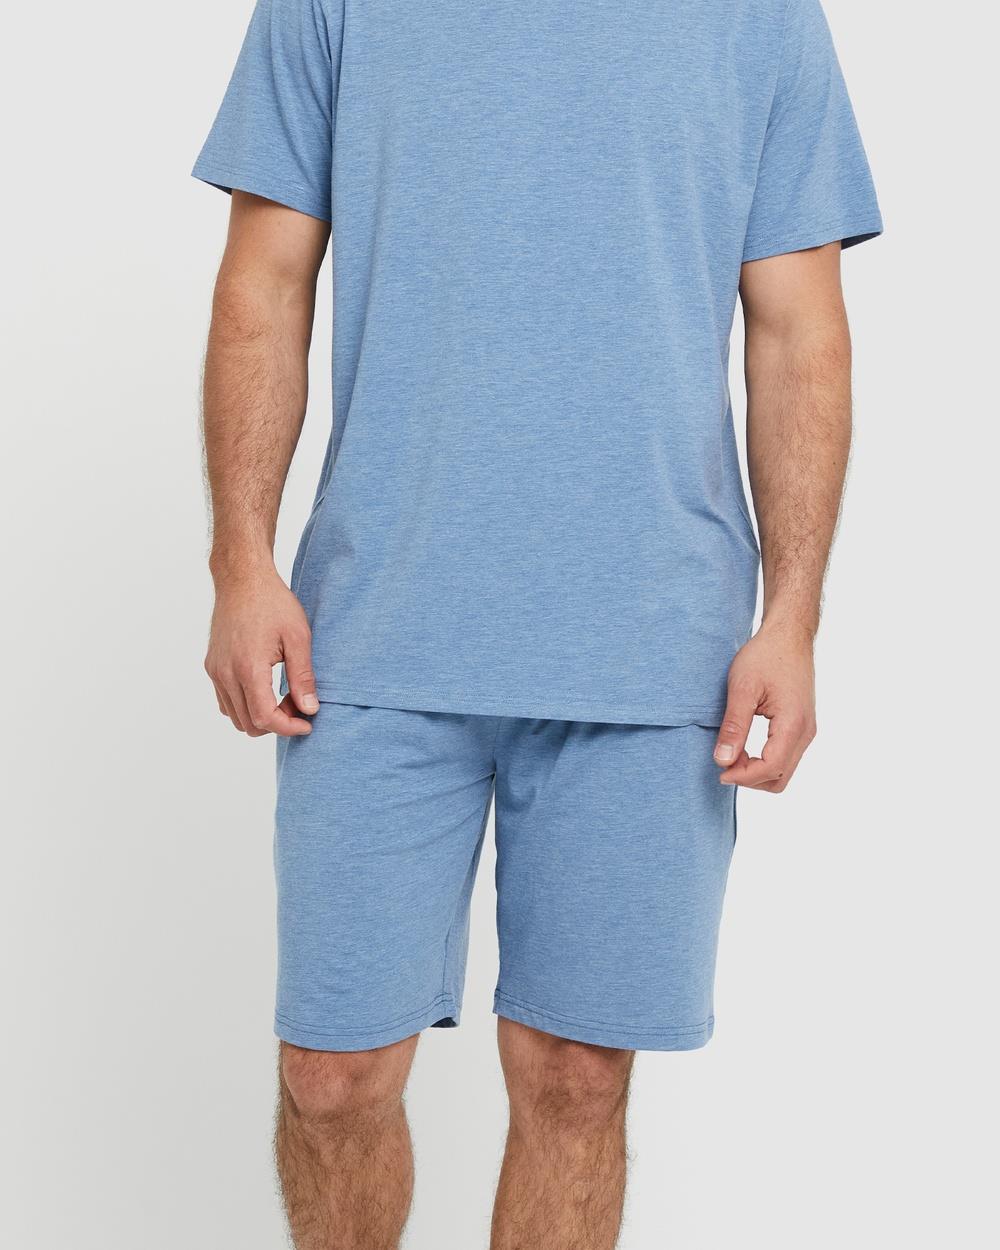 Bamboo Body - Men's Chill Shorts - Sleepwear (Lake Blue) Men's Chill Shorts